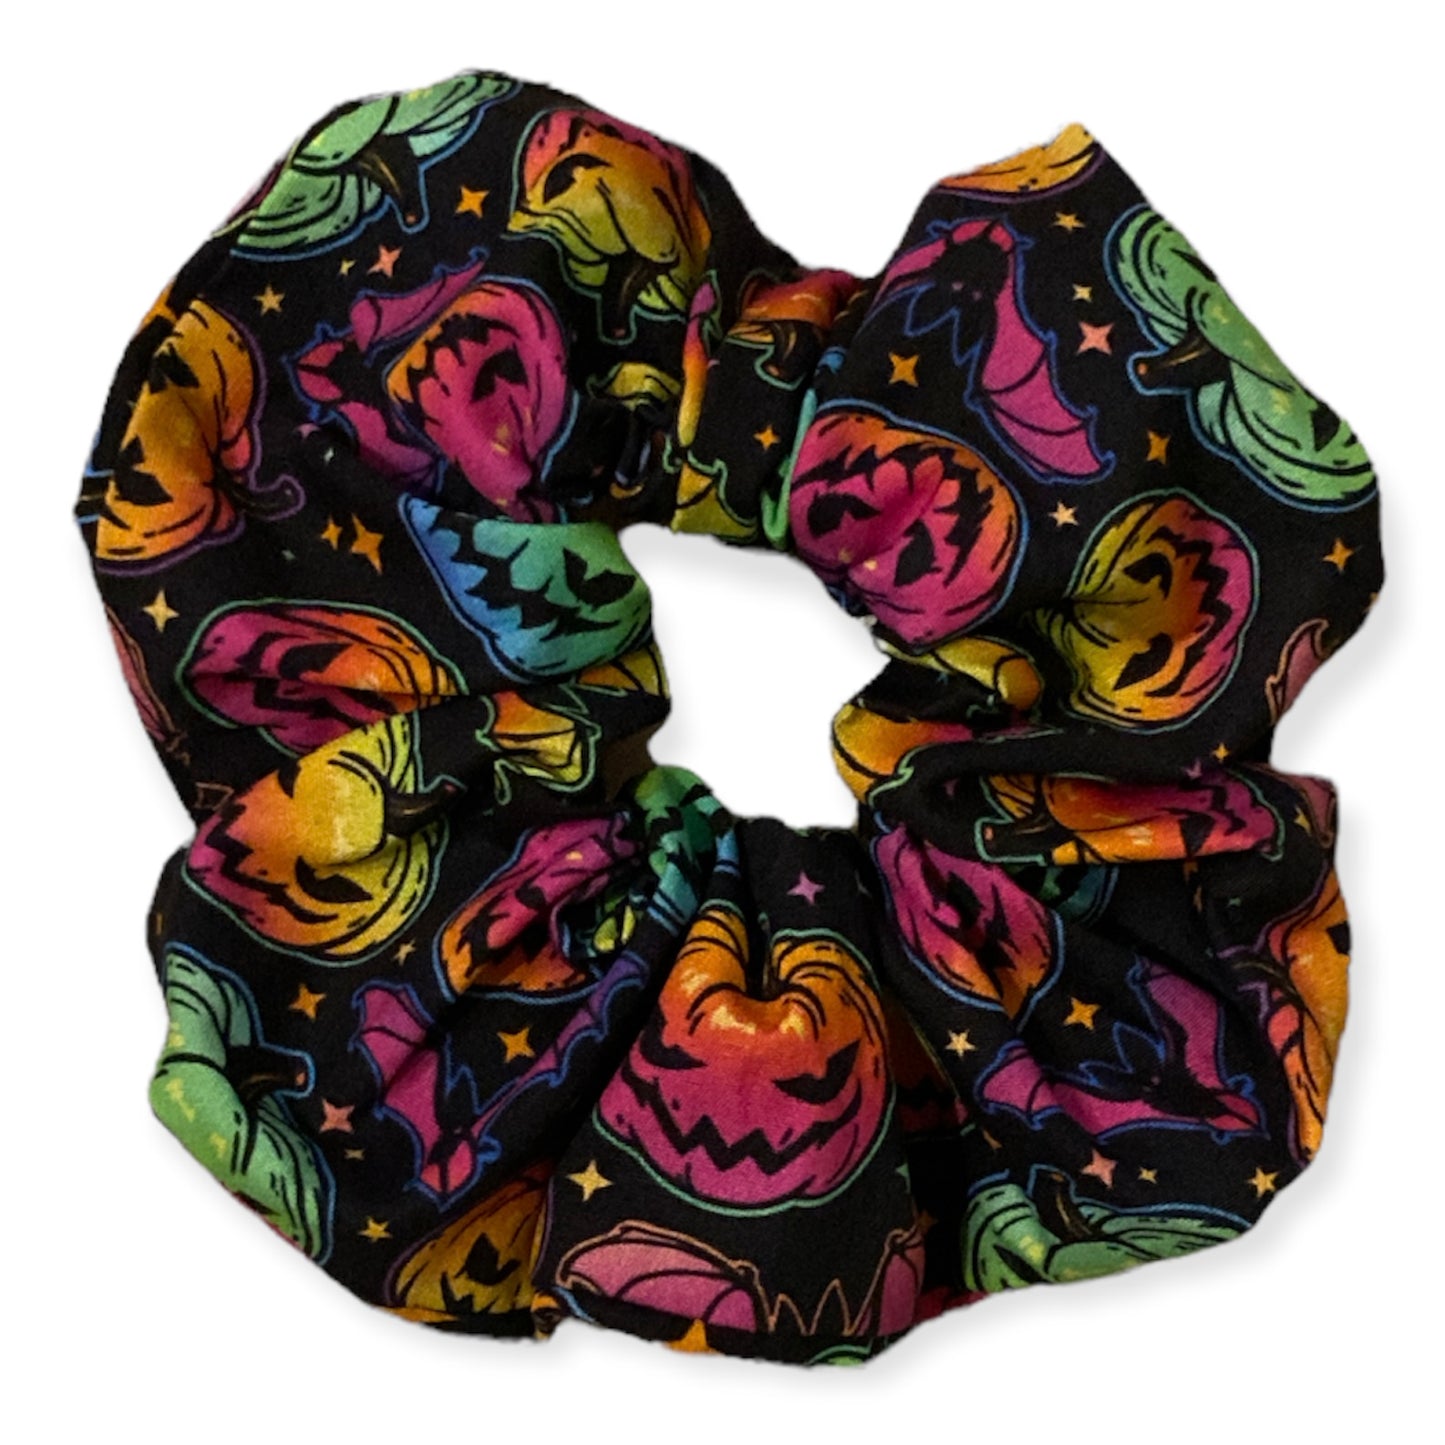 Neon pumpkin and bat scrunchies